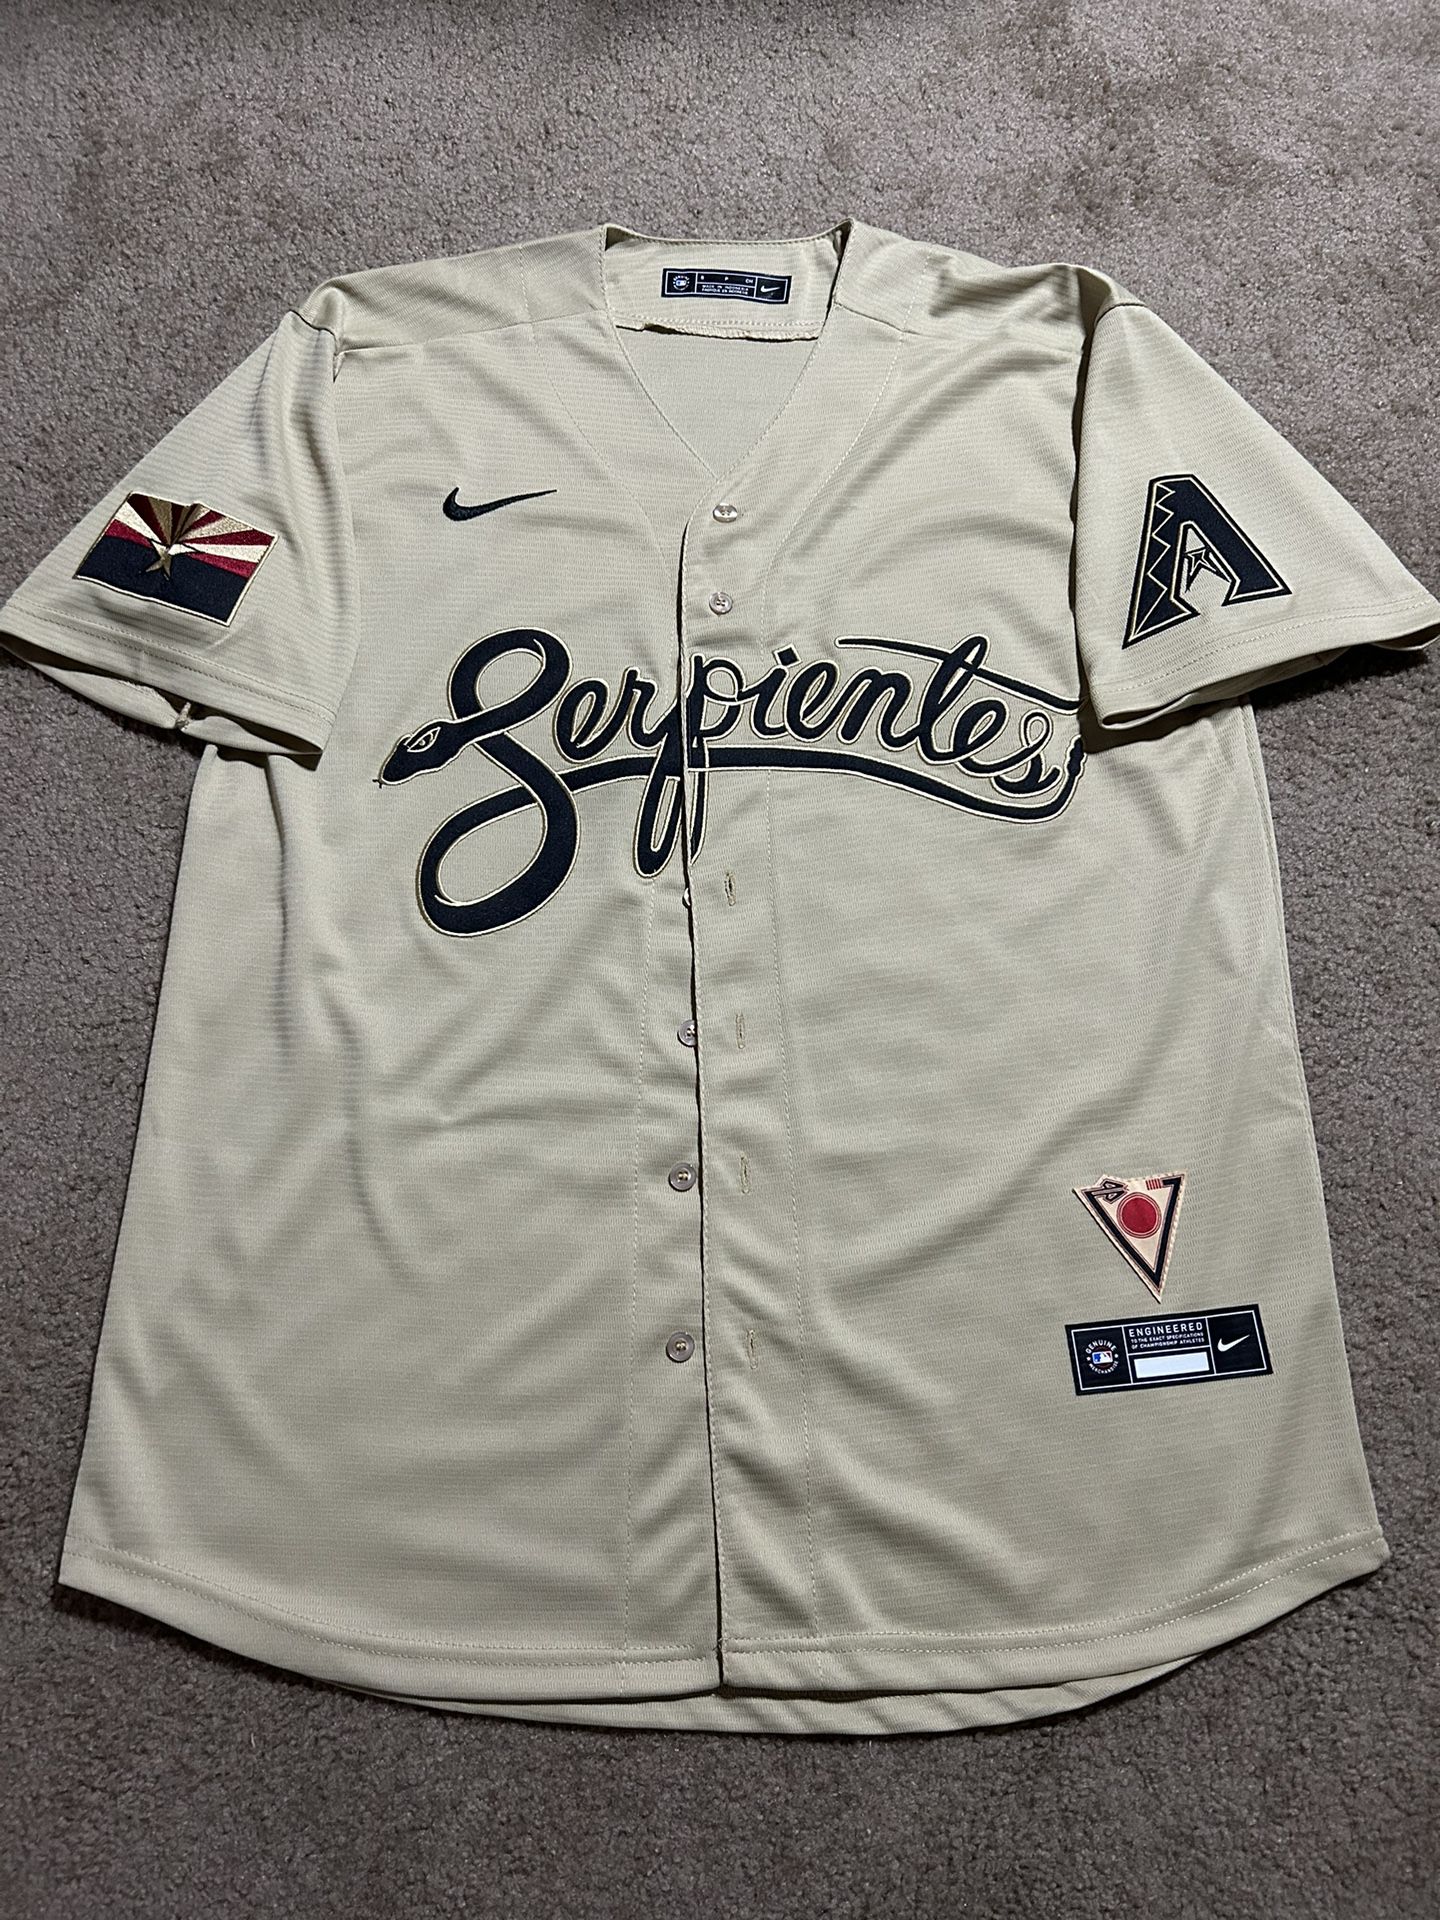 Arizona Diamondbacks 'Serpientes' CityConnect Baseball Jersey for